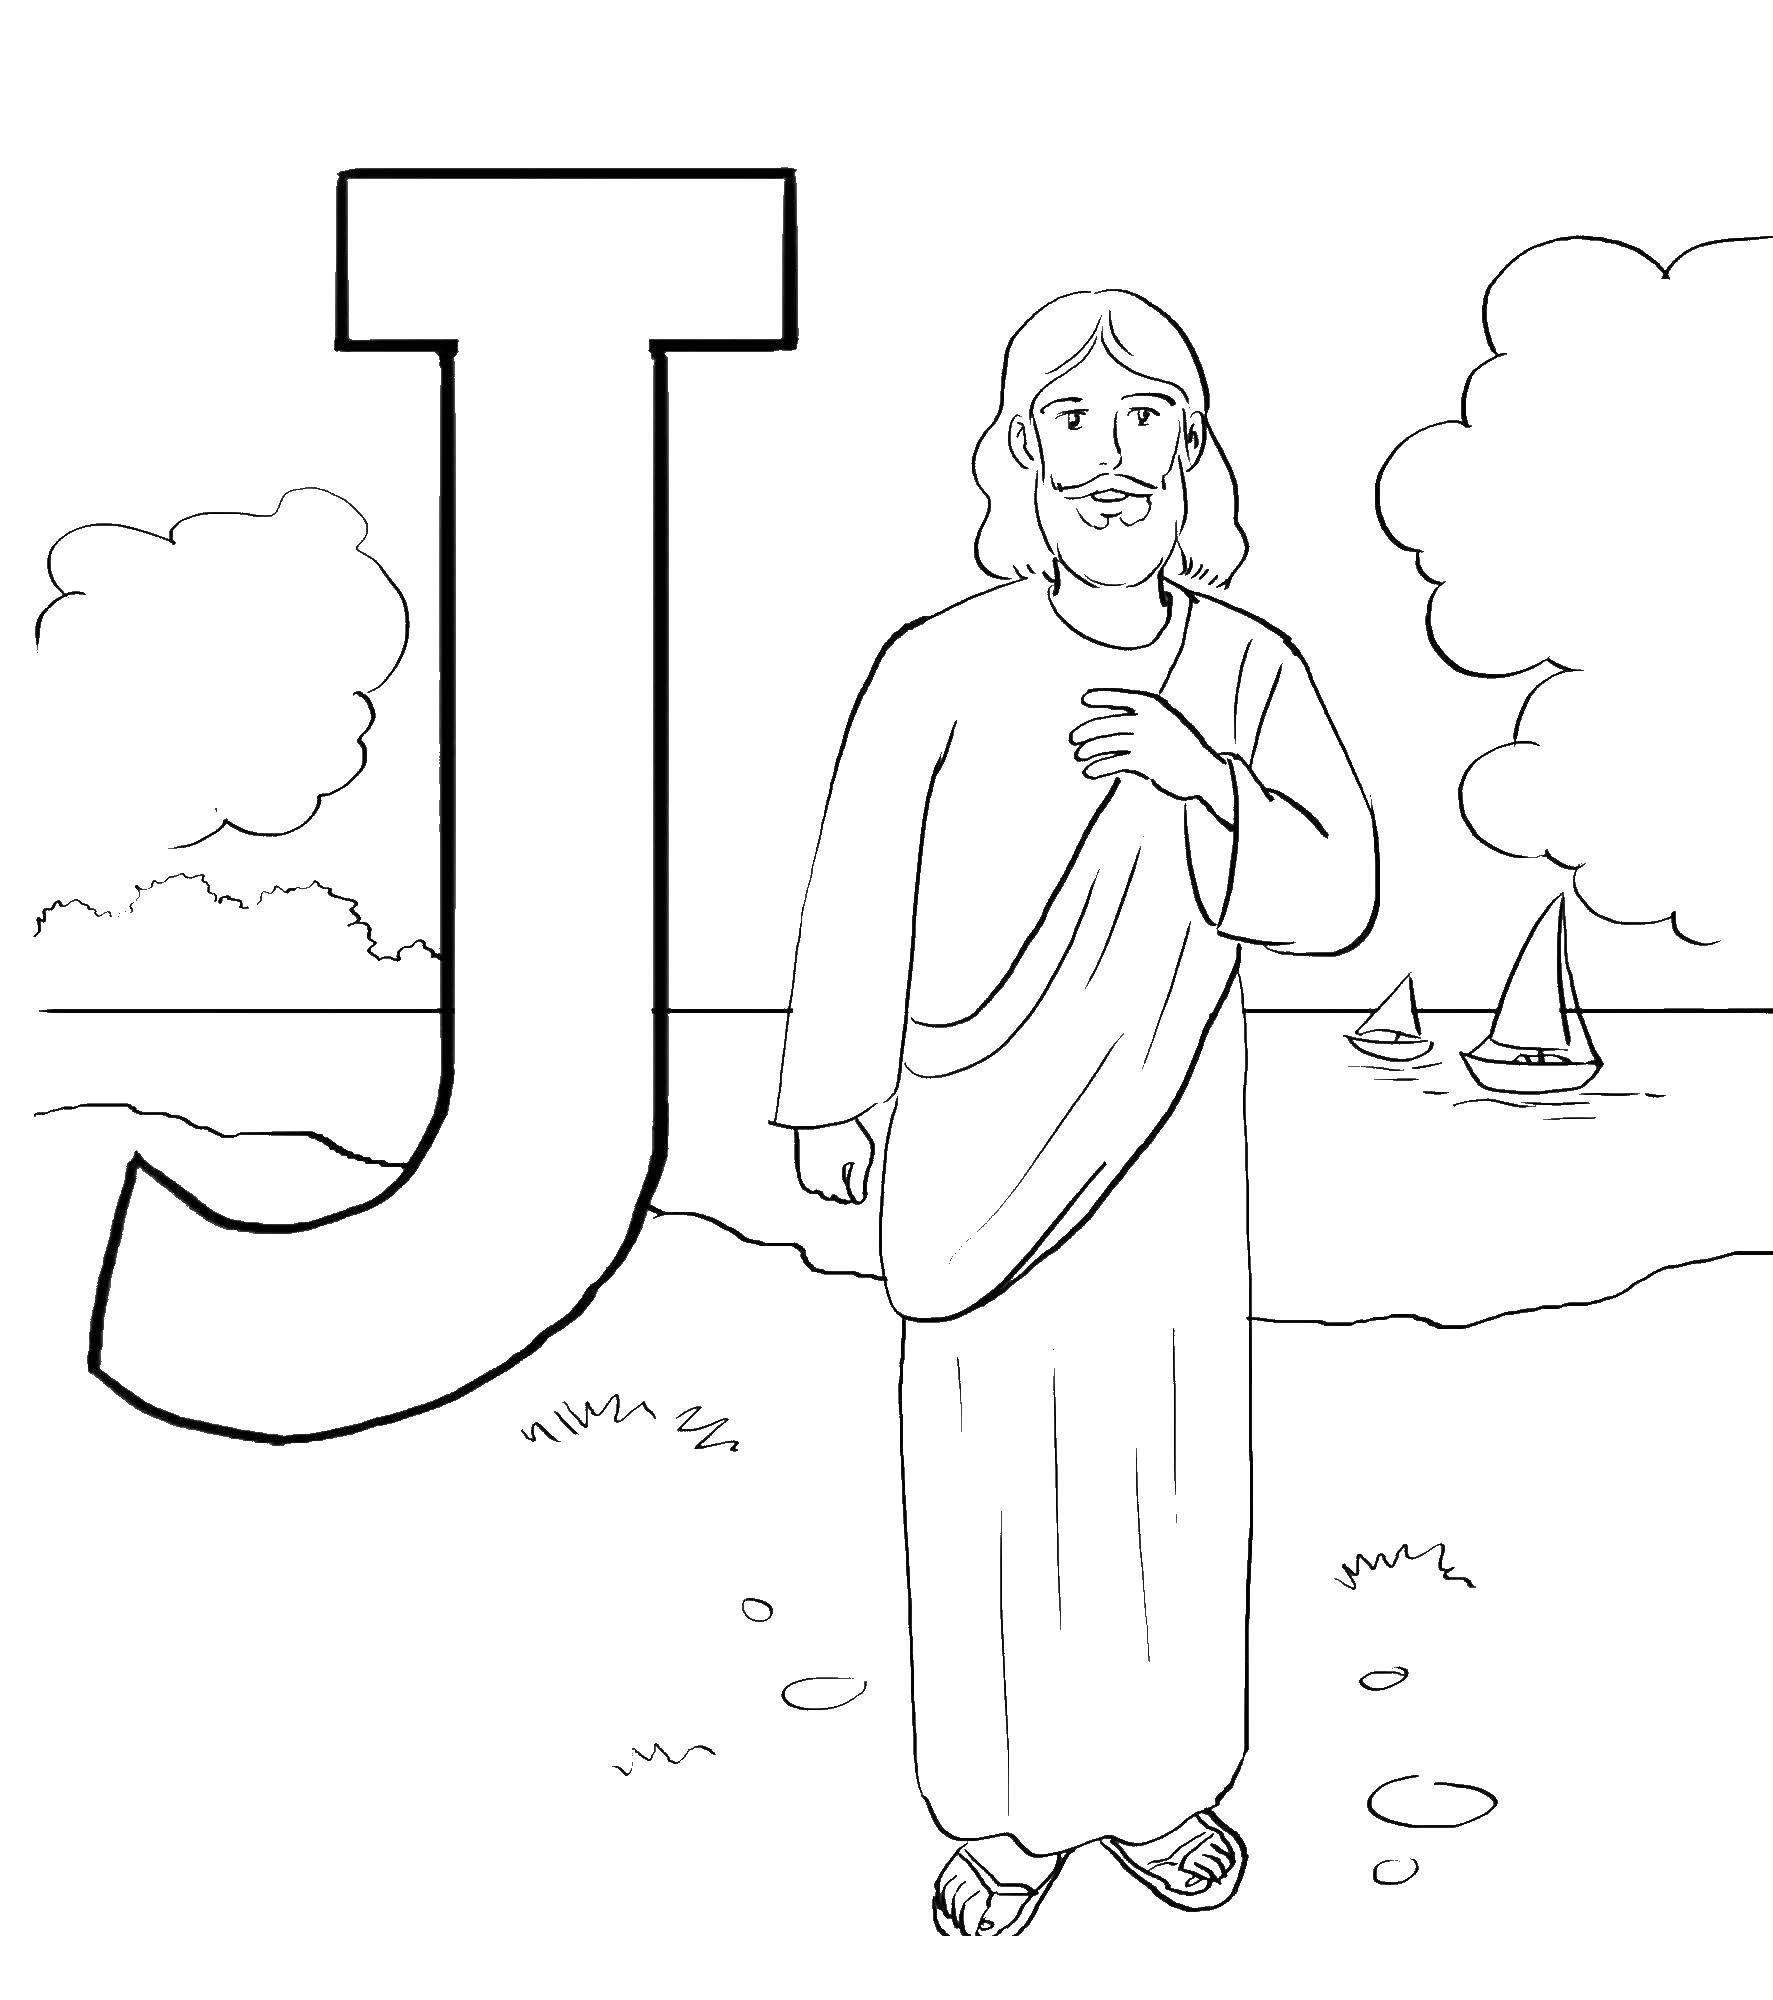 Coloring English alphabet Jesus. Category English alphabet. Tags:  The English alphabet, Jesus.